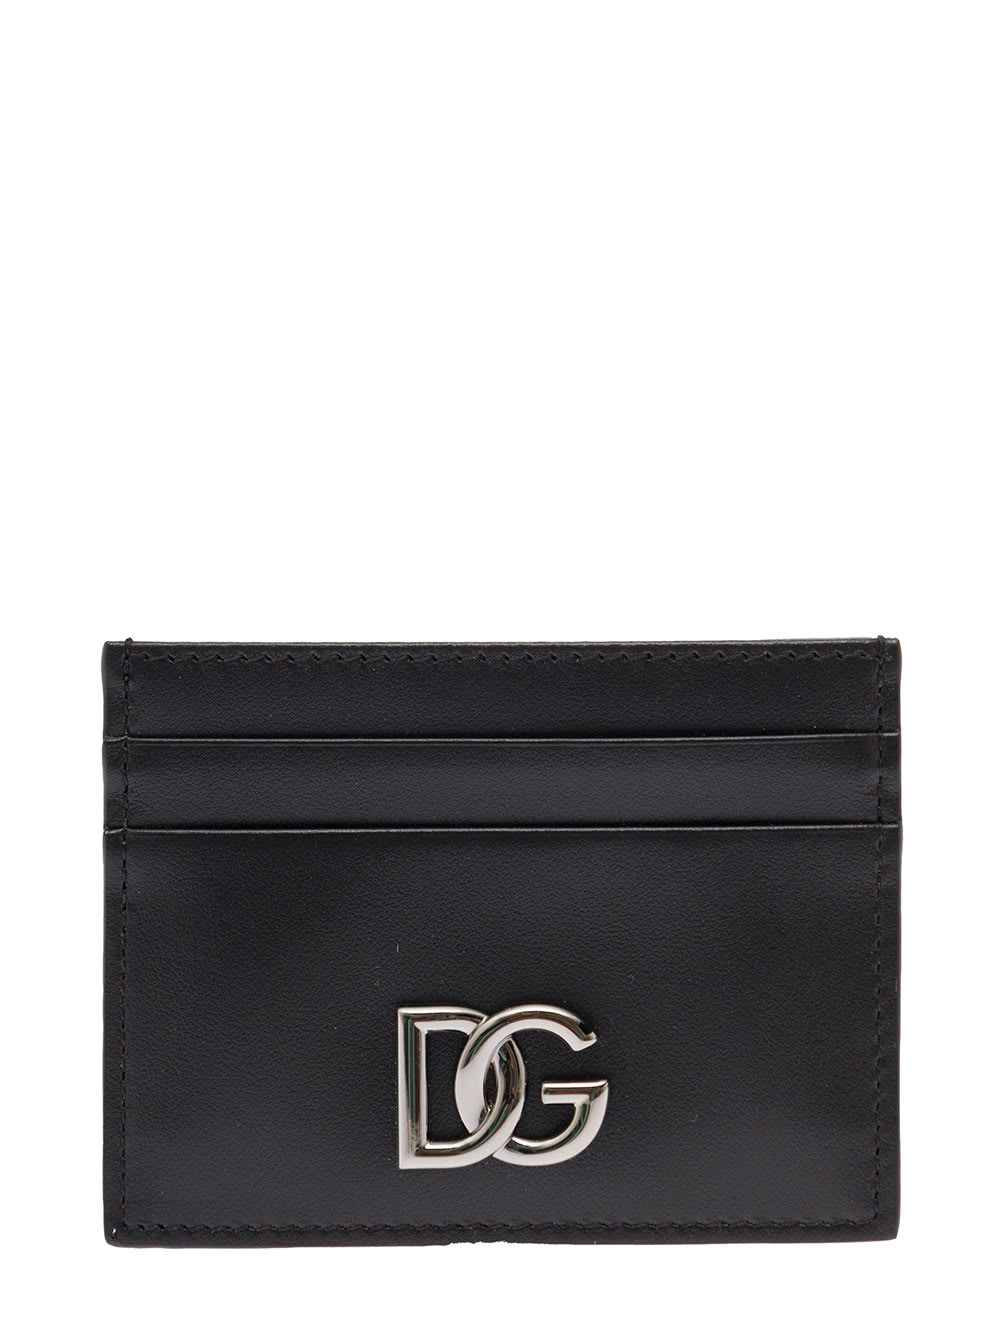 Dolce & Gabbana Man s Black Leather Card Holder With Metal Logo